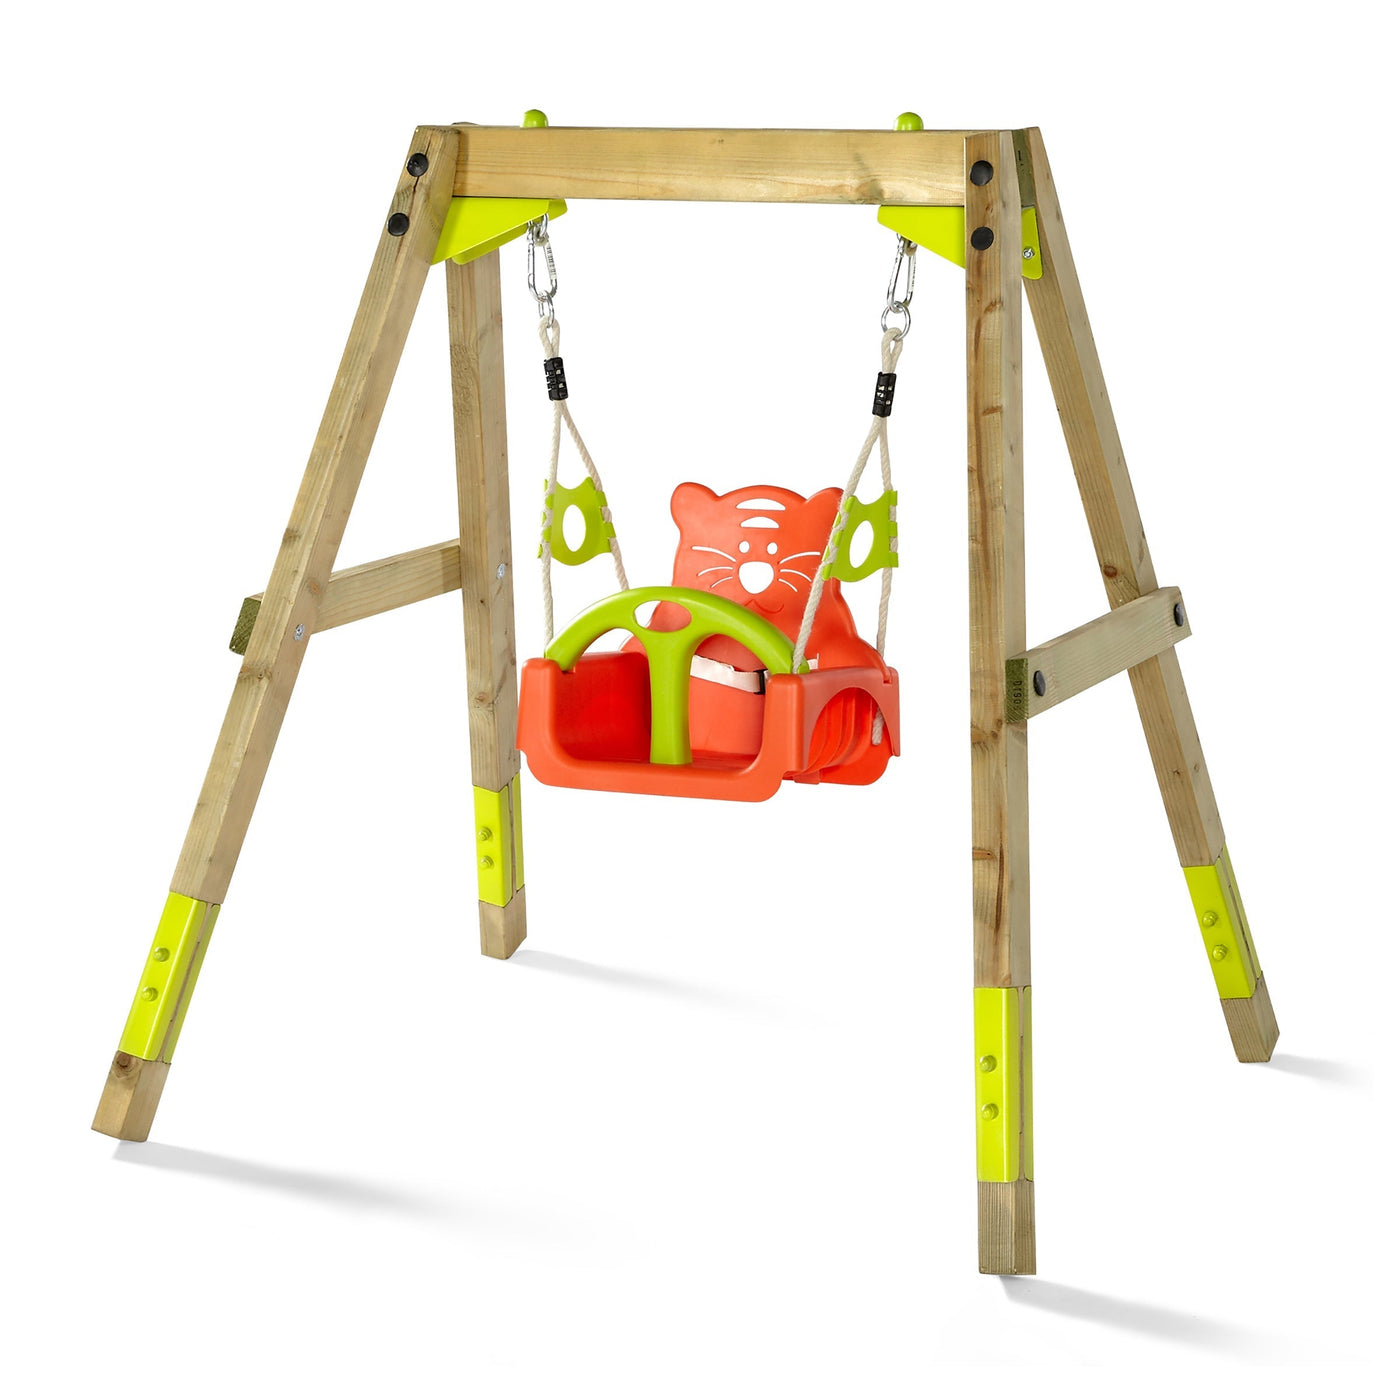 Plum® Wooden Growing Swing Set